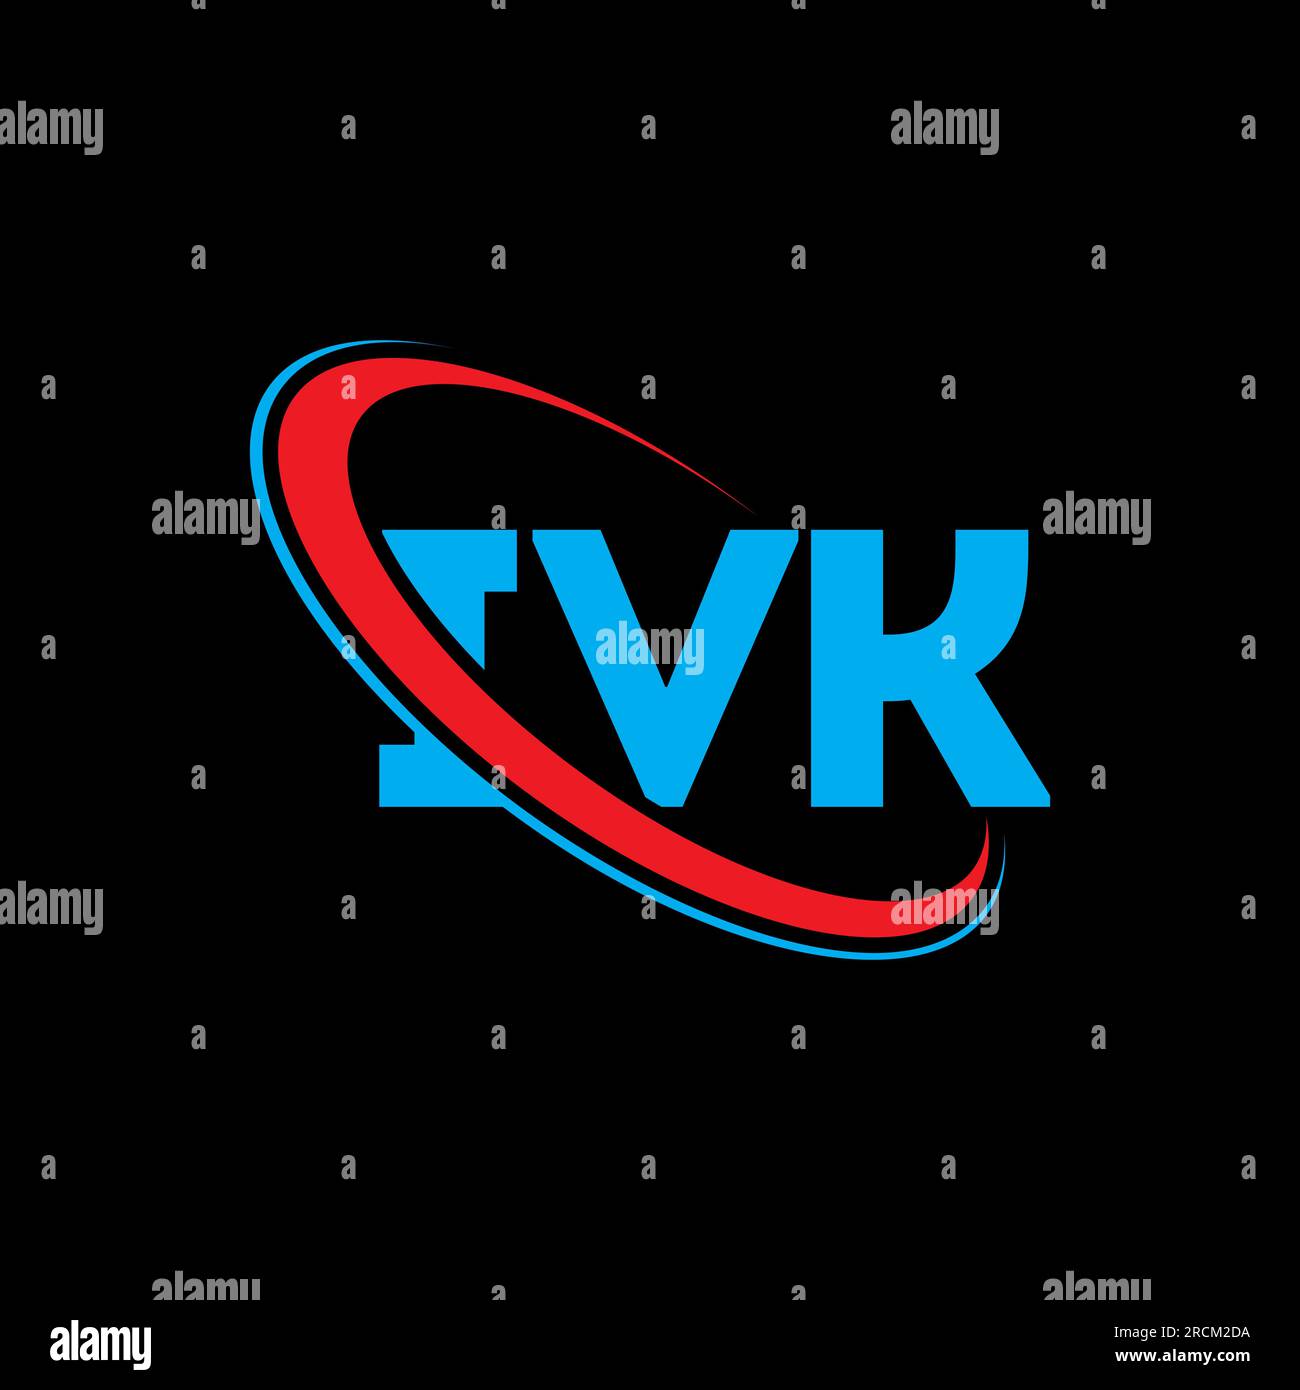 IVK logo. IVK letter. IVK letter logo design. Initials IVK logo linked with circle and uppercase monogram logo. IVK typography for technology, busines Stock Vector